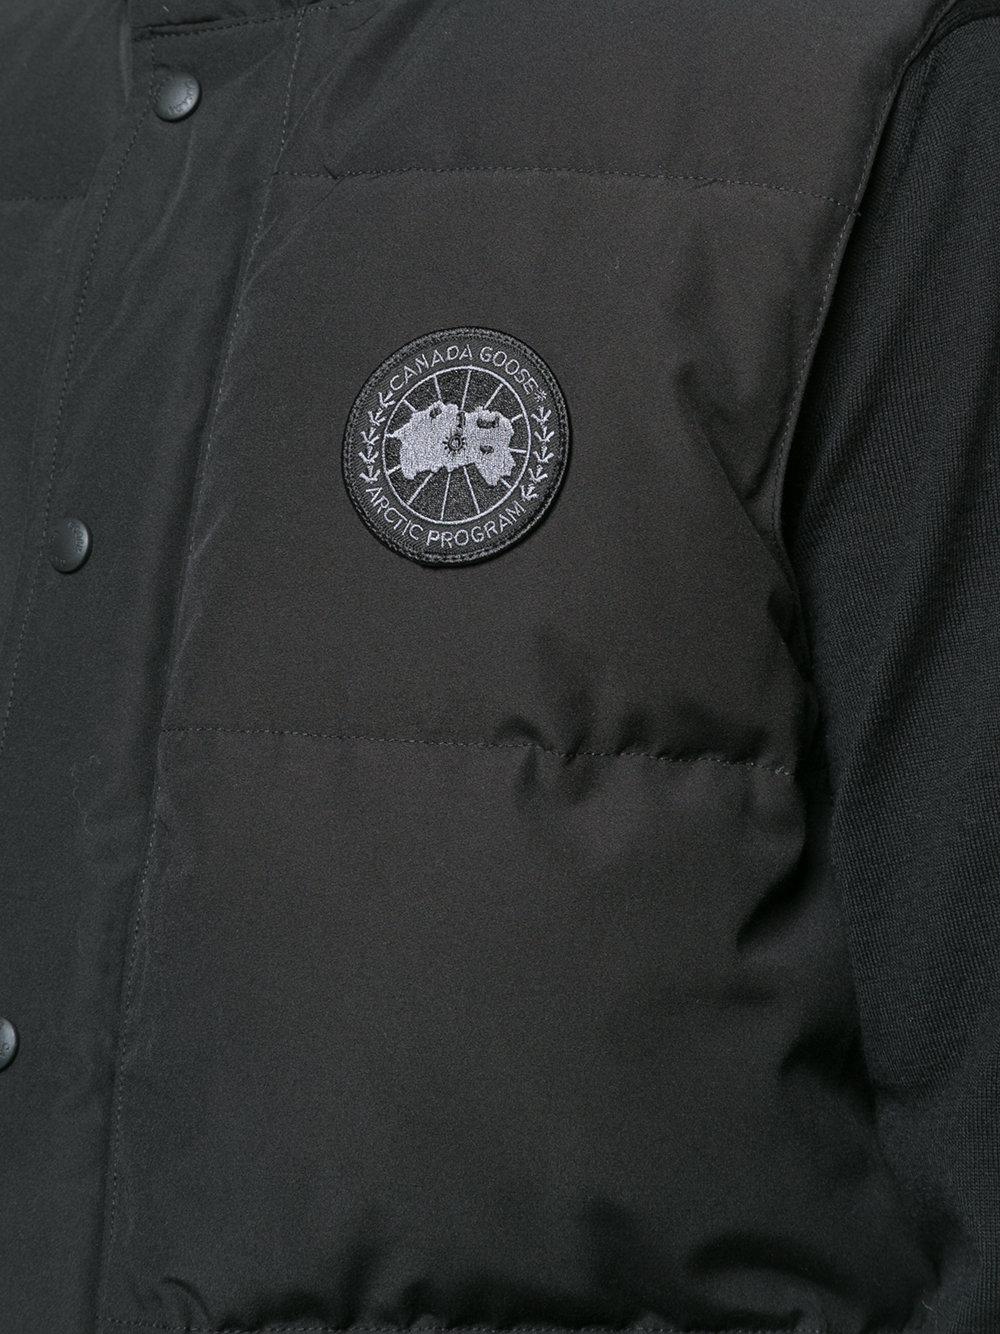 Canada Goose Cotton Logo Badge Gilet in Black for Men - Lyst